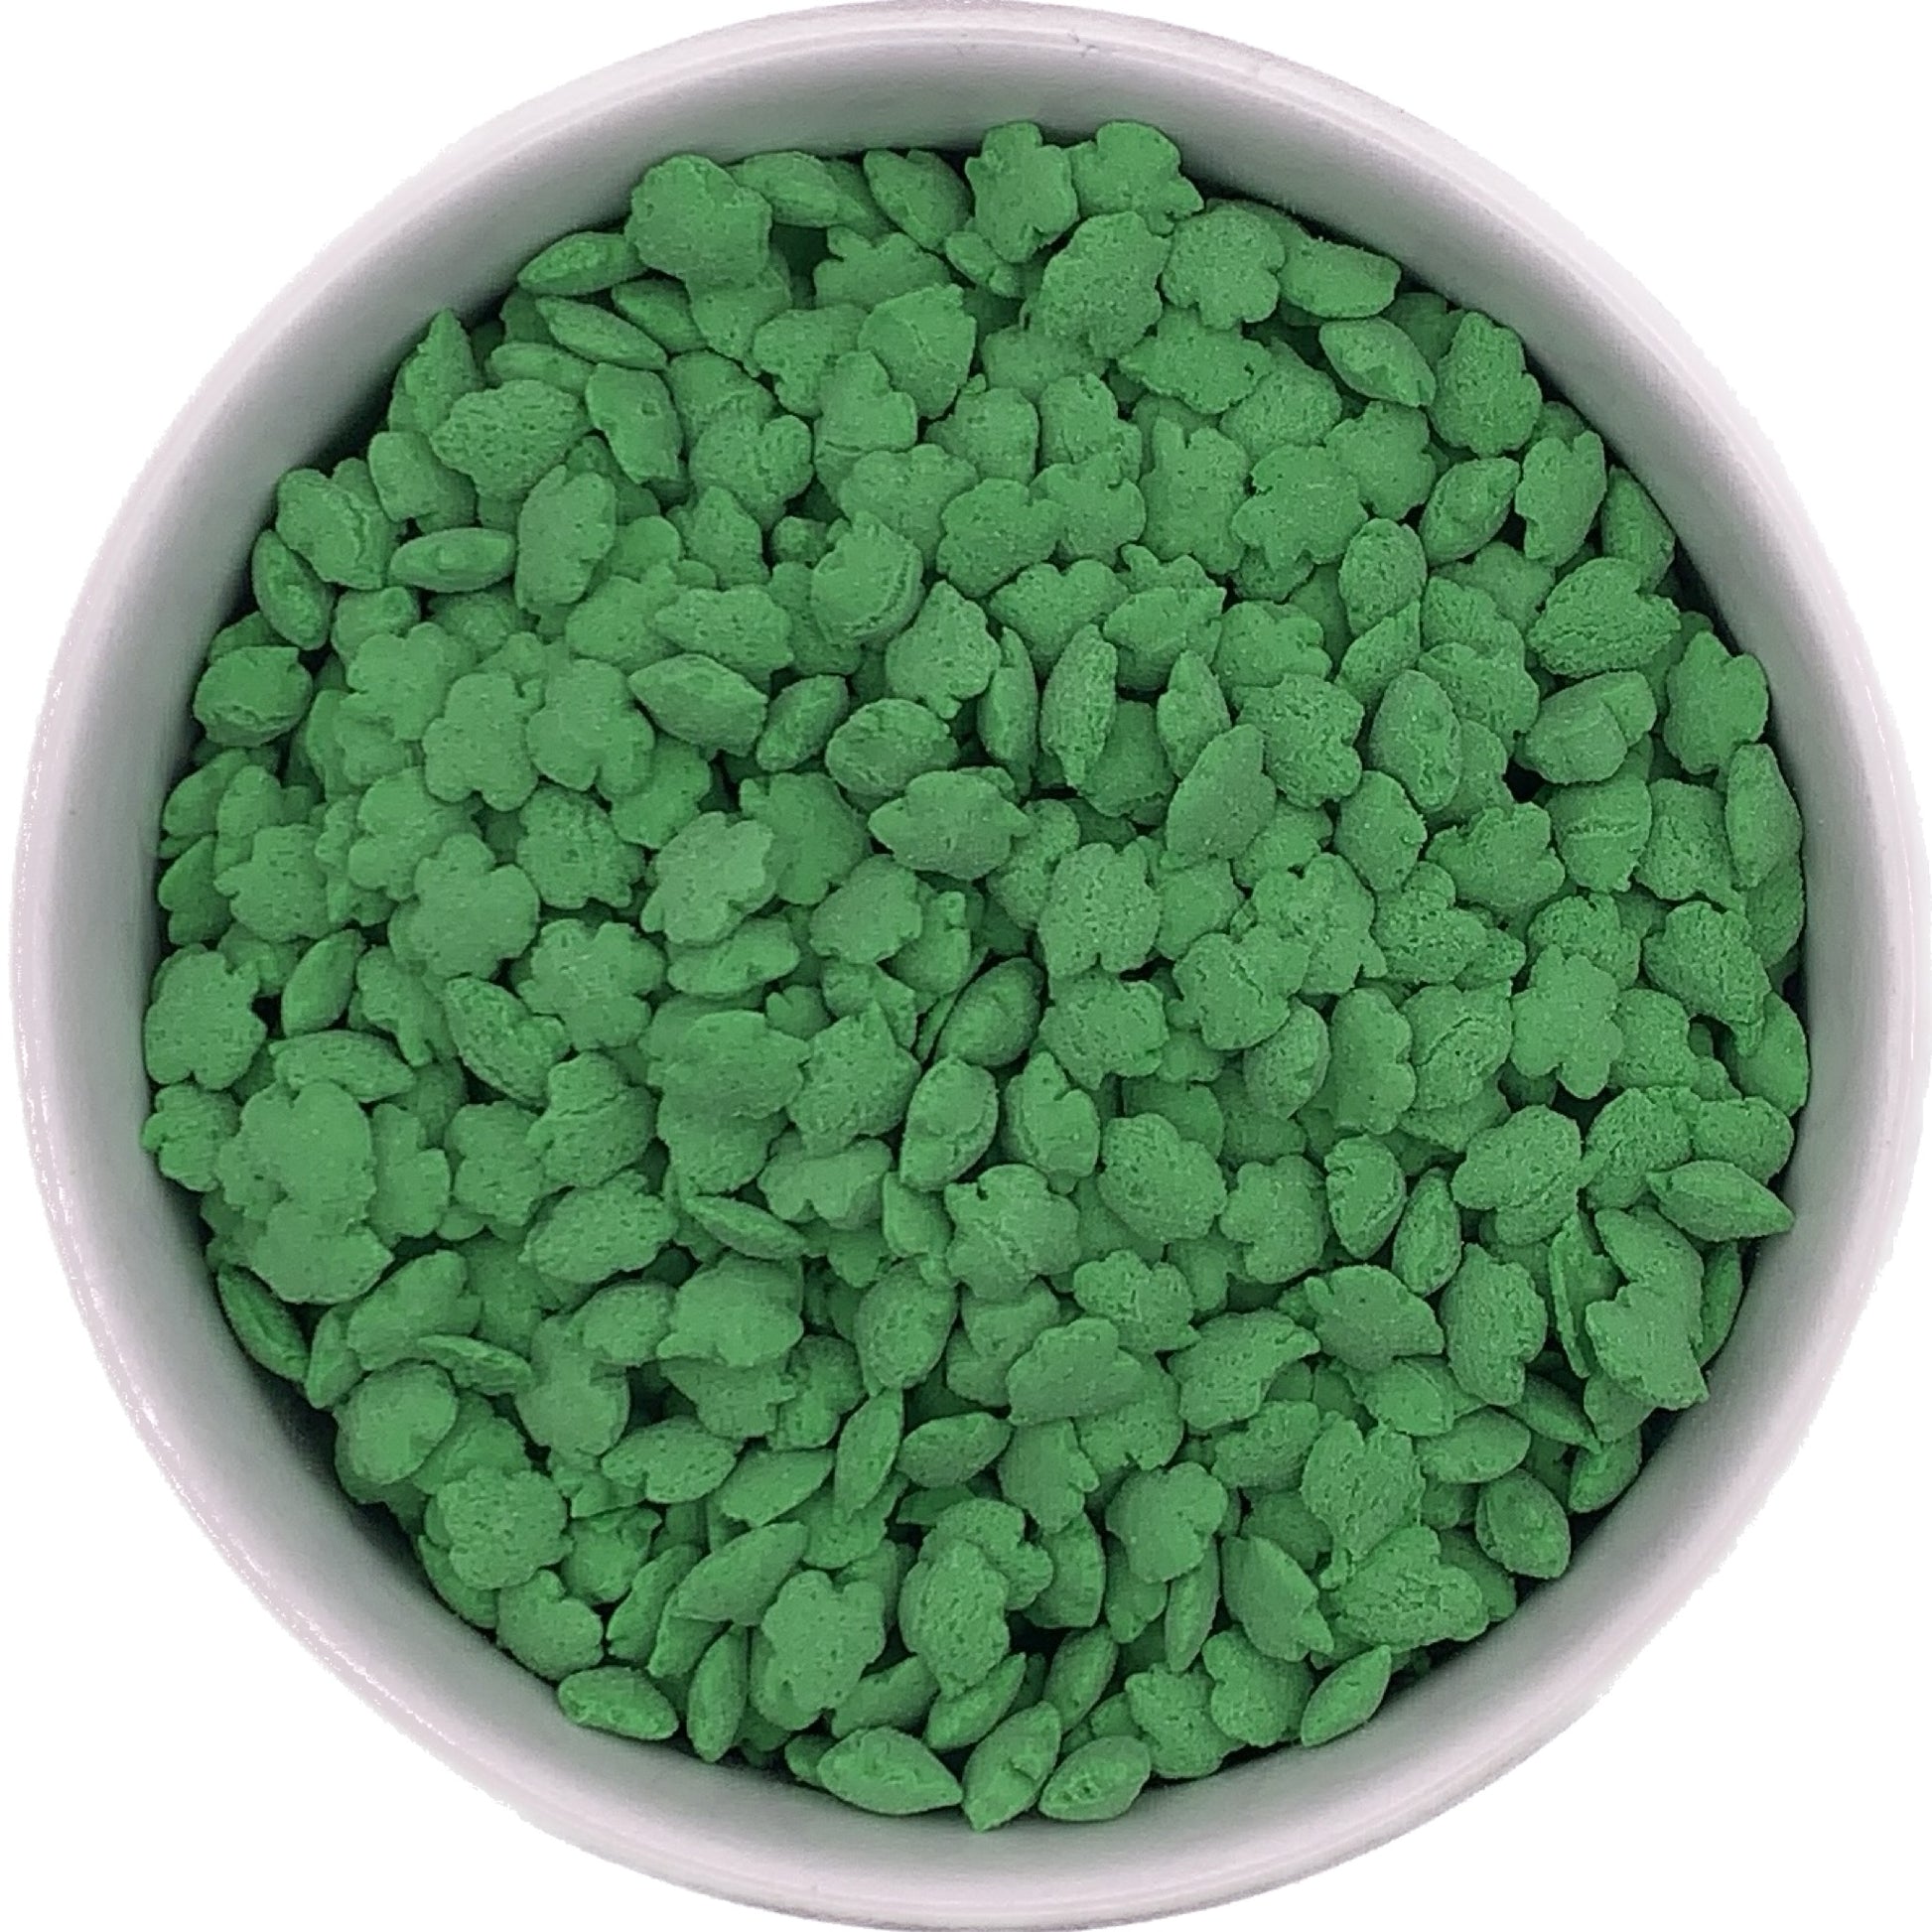 Green Shamrock Shaped Sprinkles in a Bowl